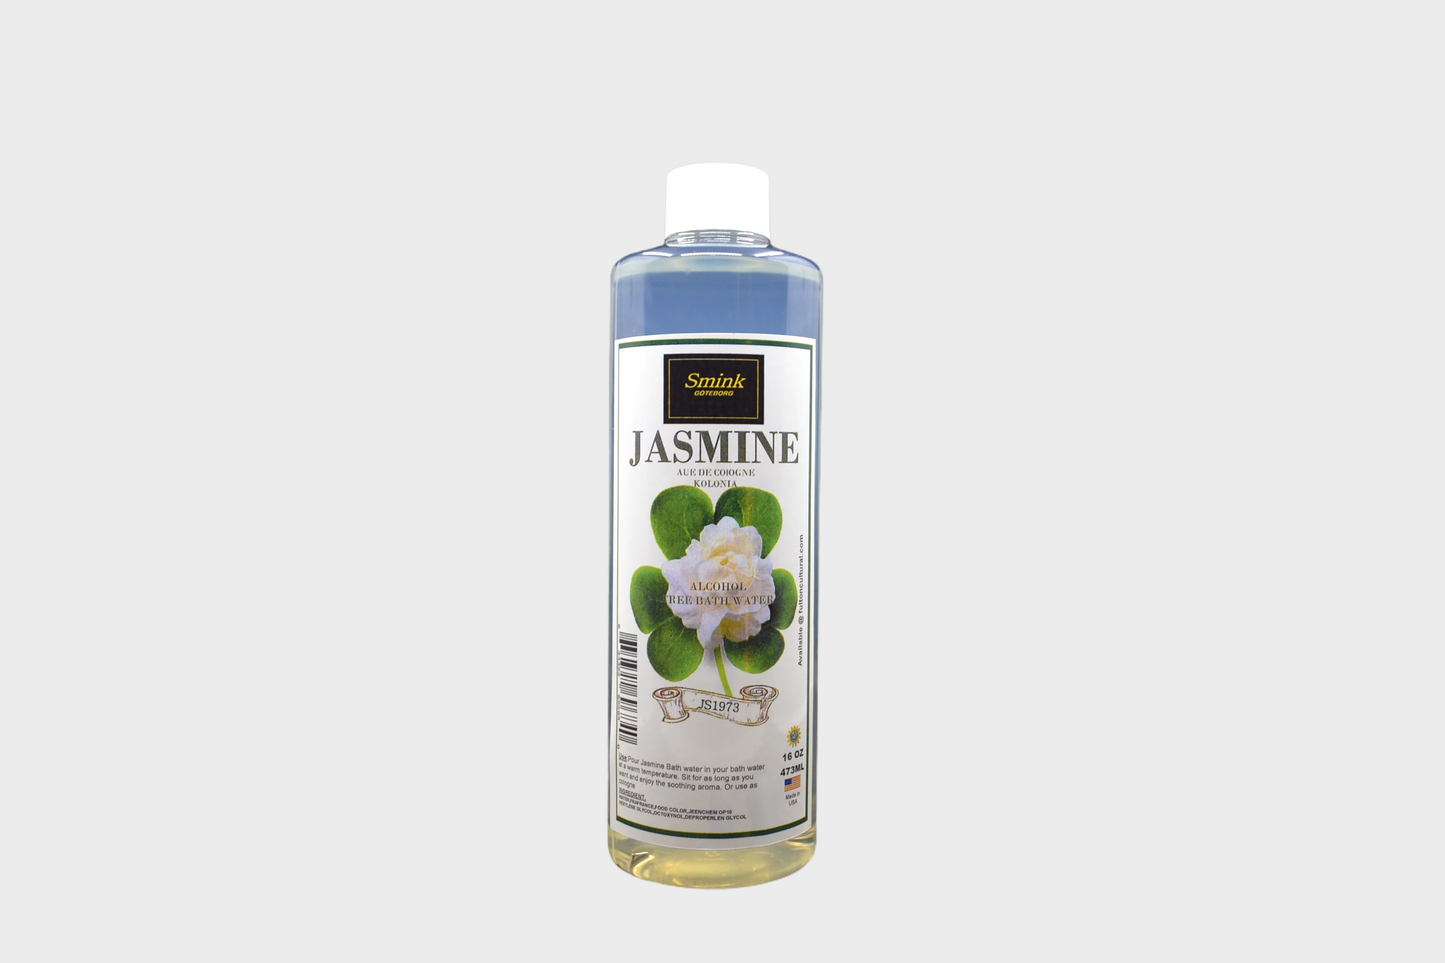 Smink Jasmine Bath Water